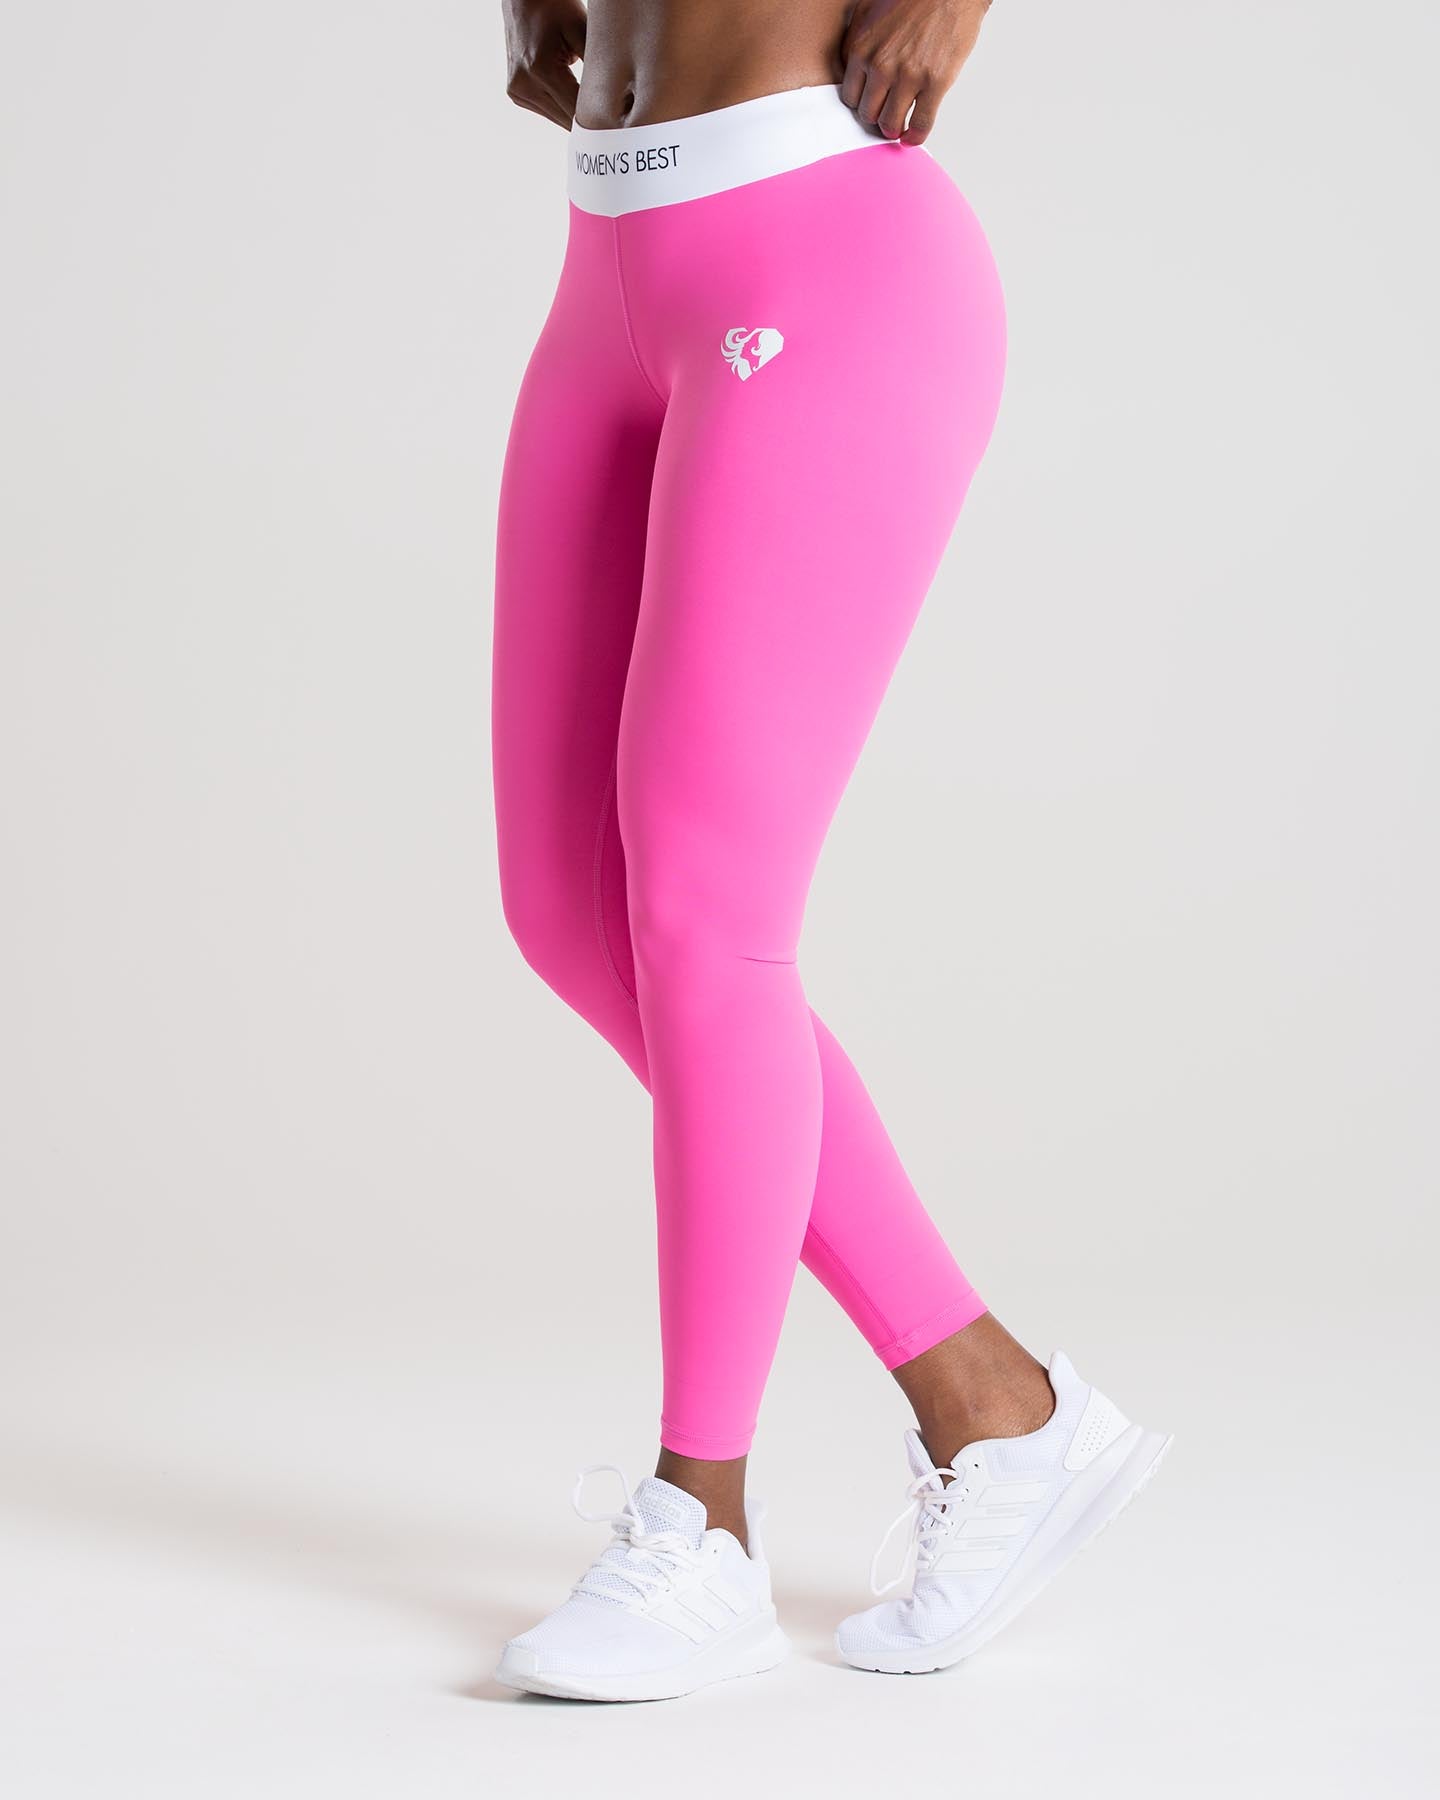 Preppy pink pastel plaid leggings